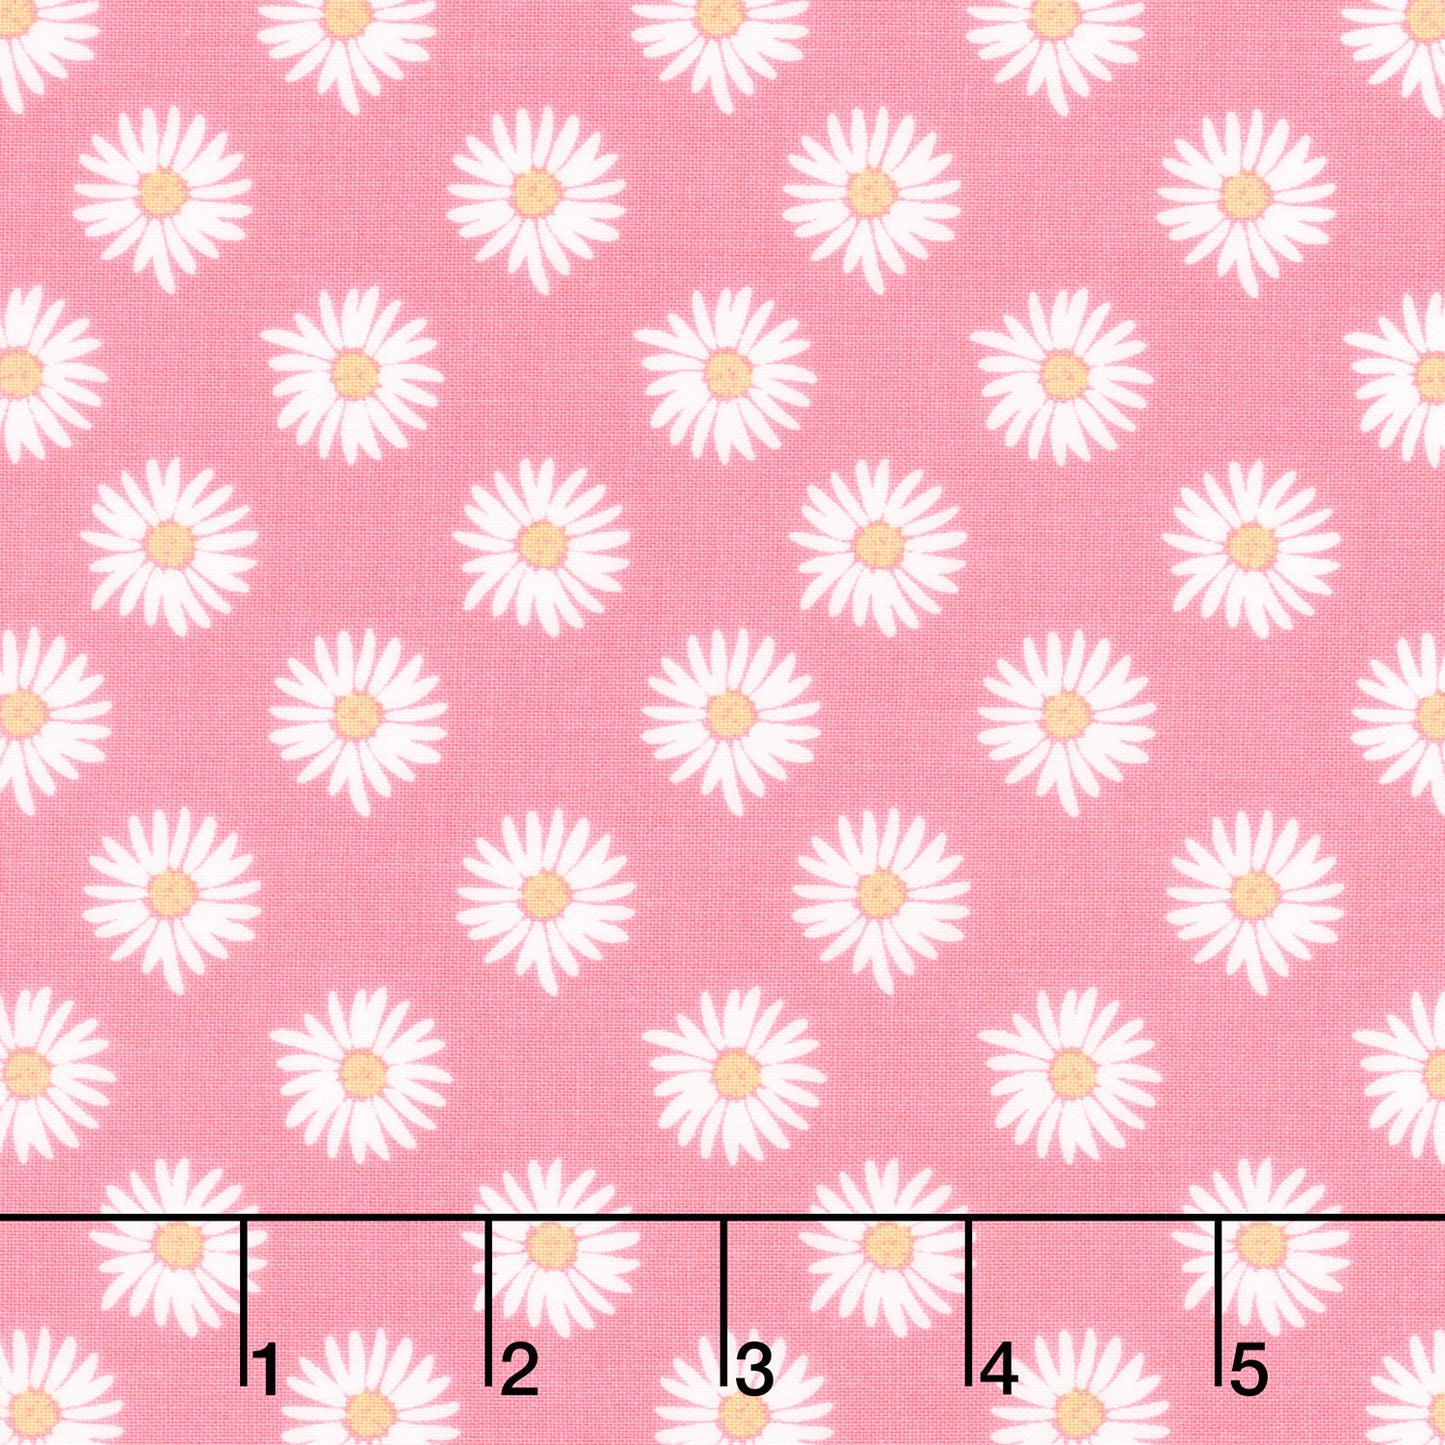 Flora No. 6 - Daisies Pink Yardage Primary Image